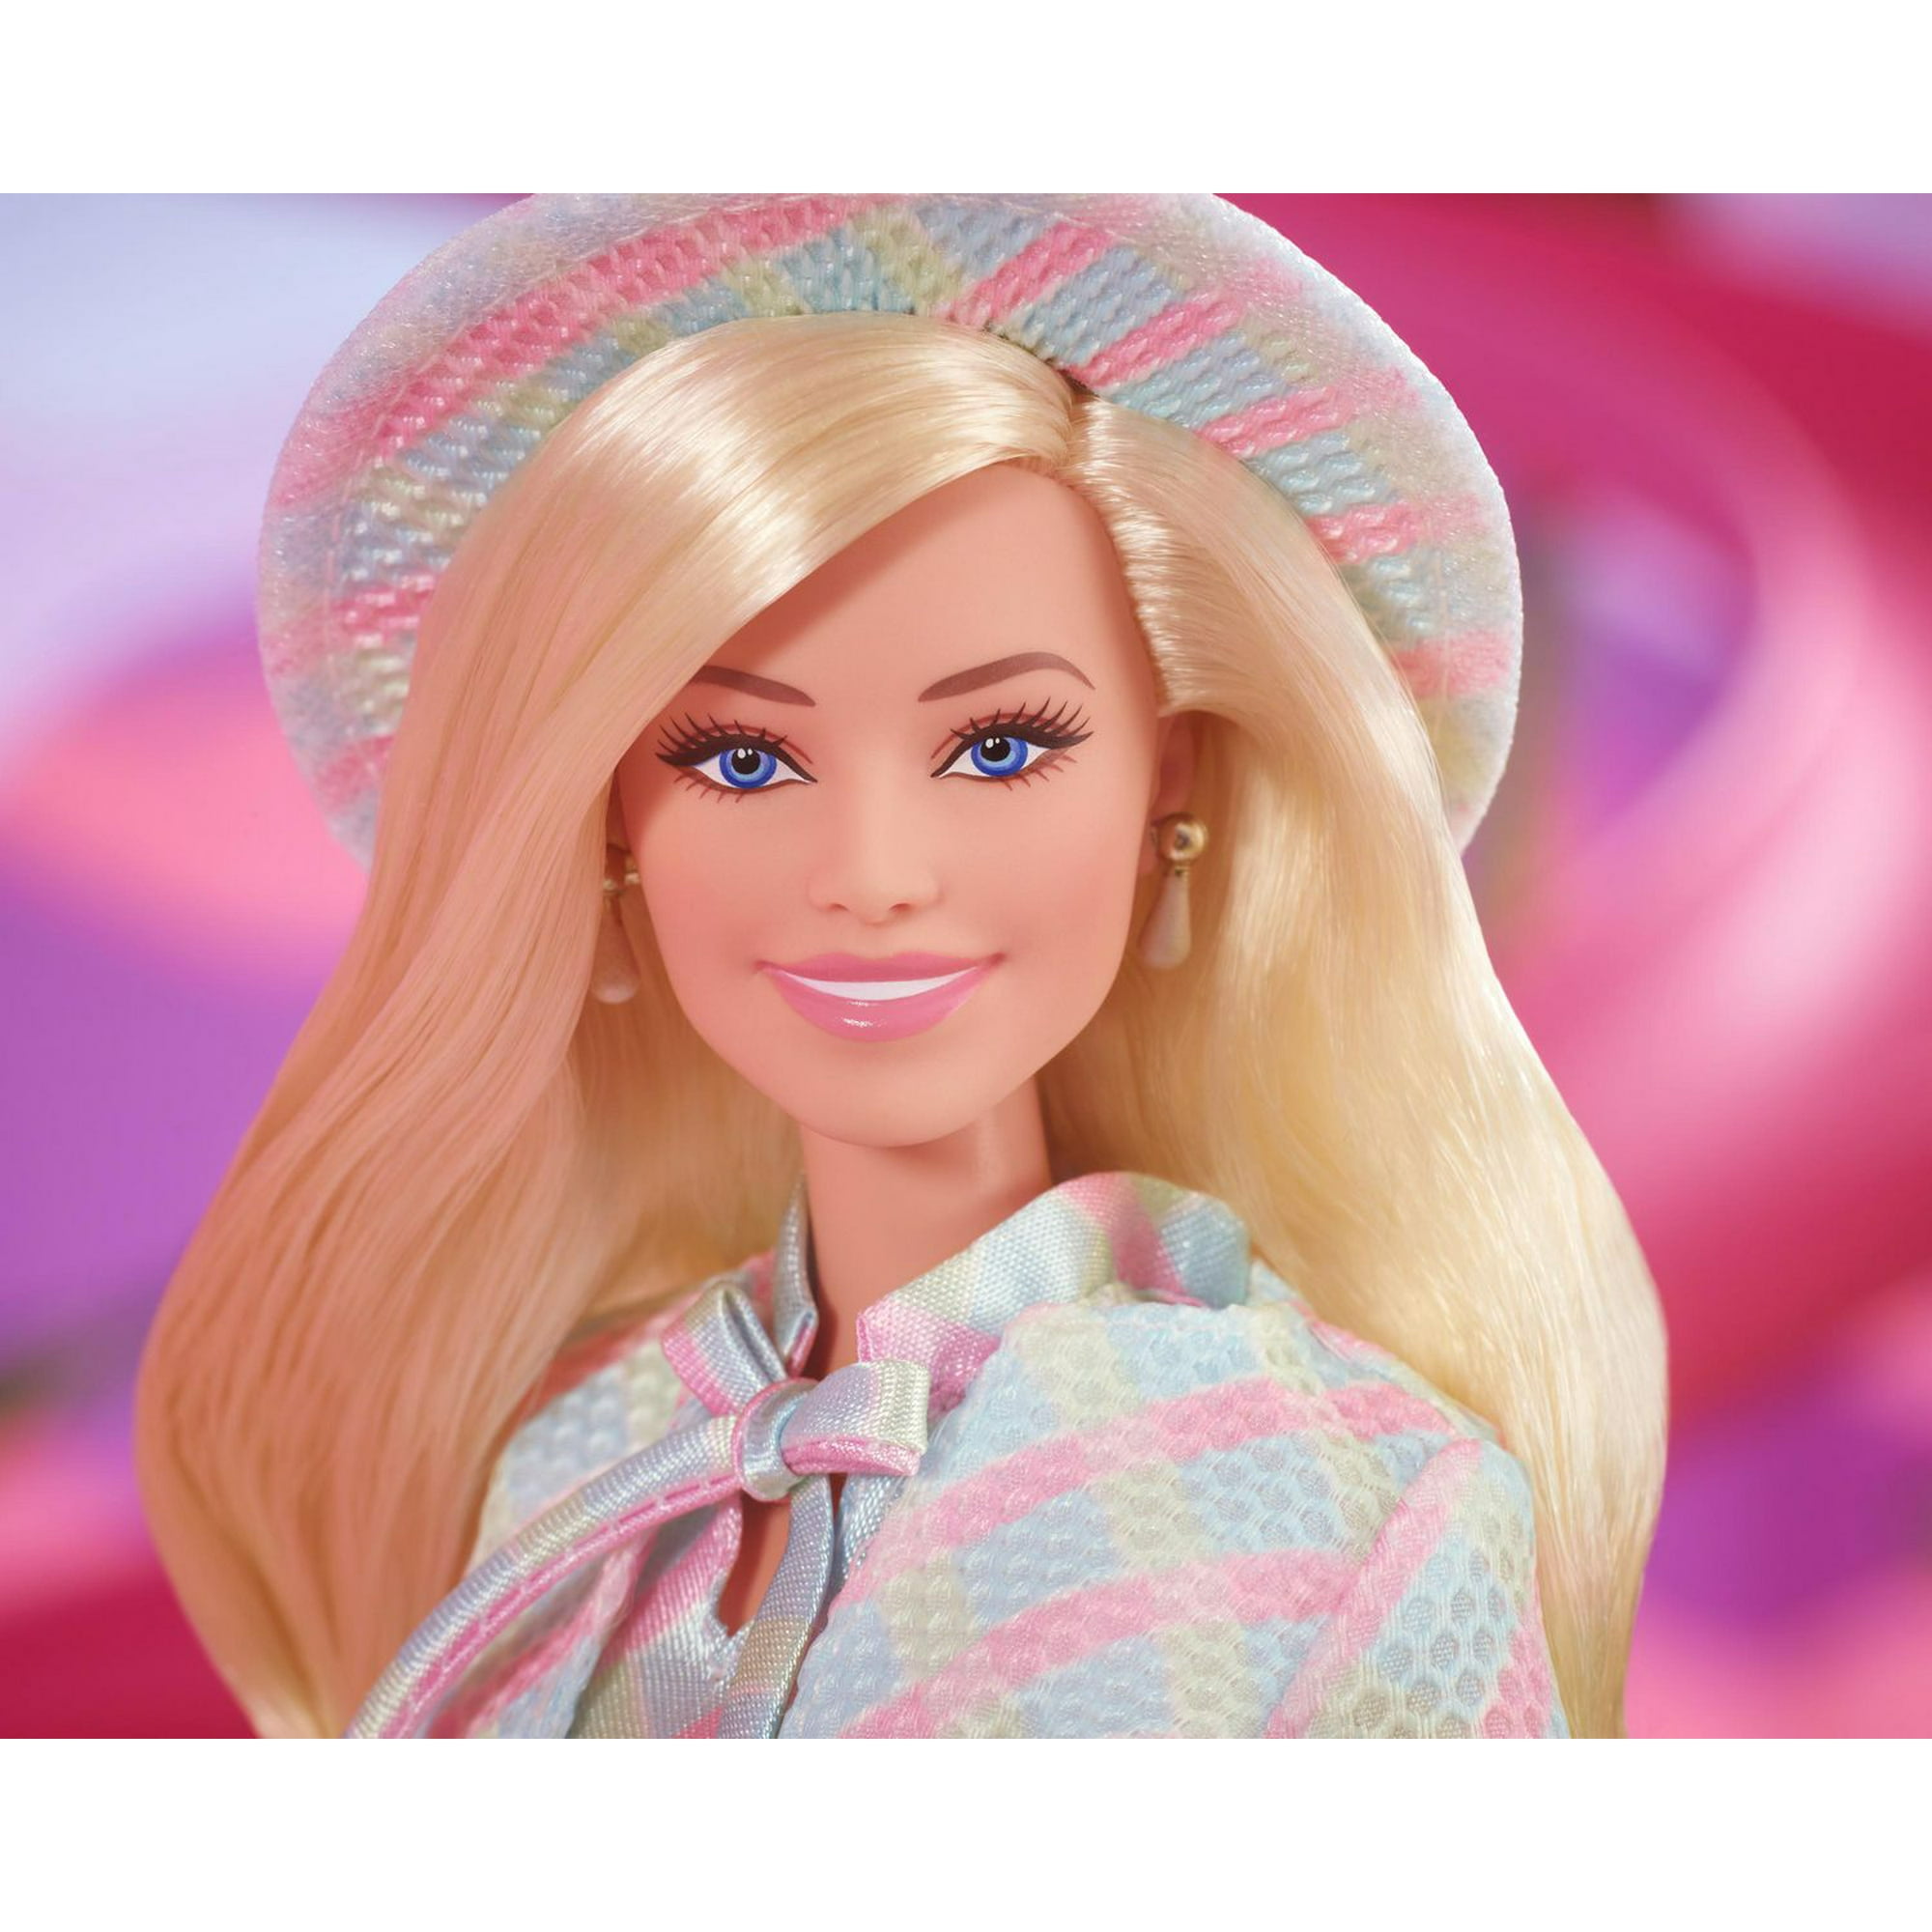 Plaid Clothes Barbie Doll, Pink White Barbie Dress